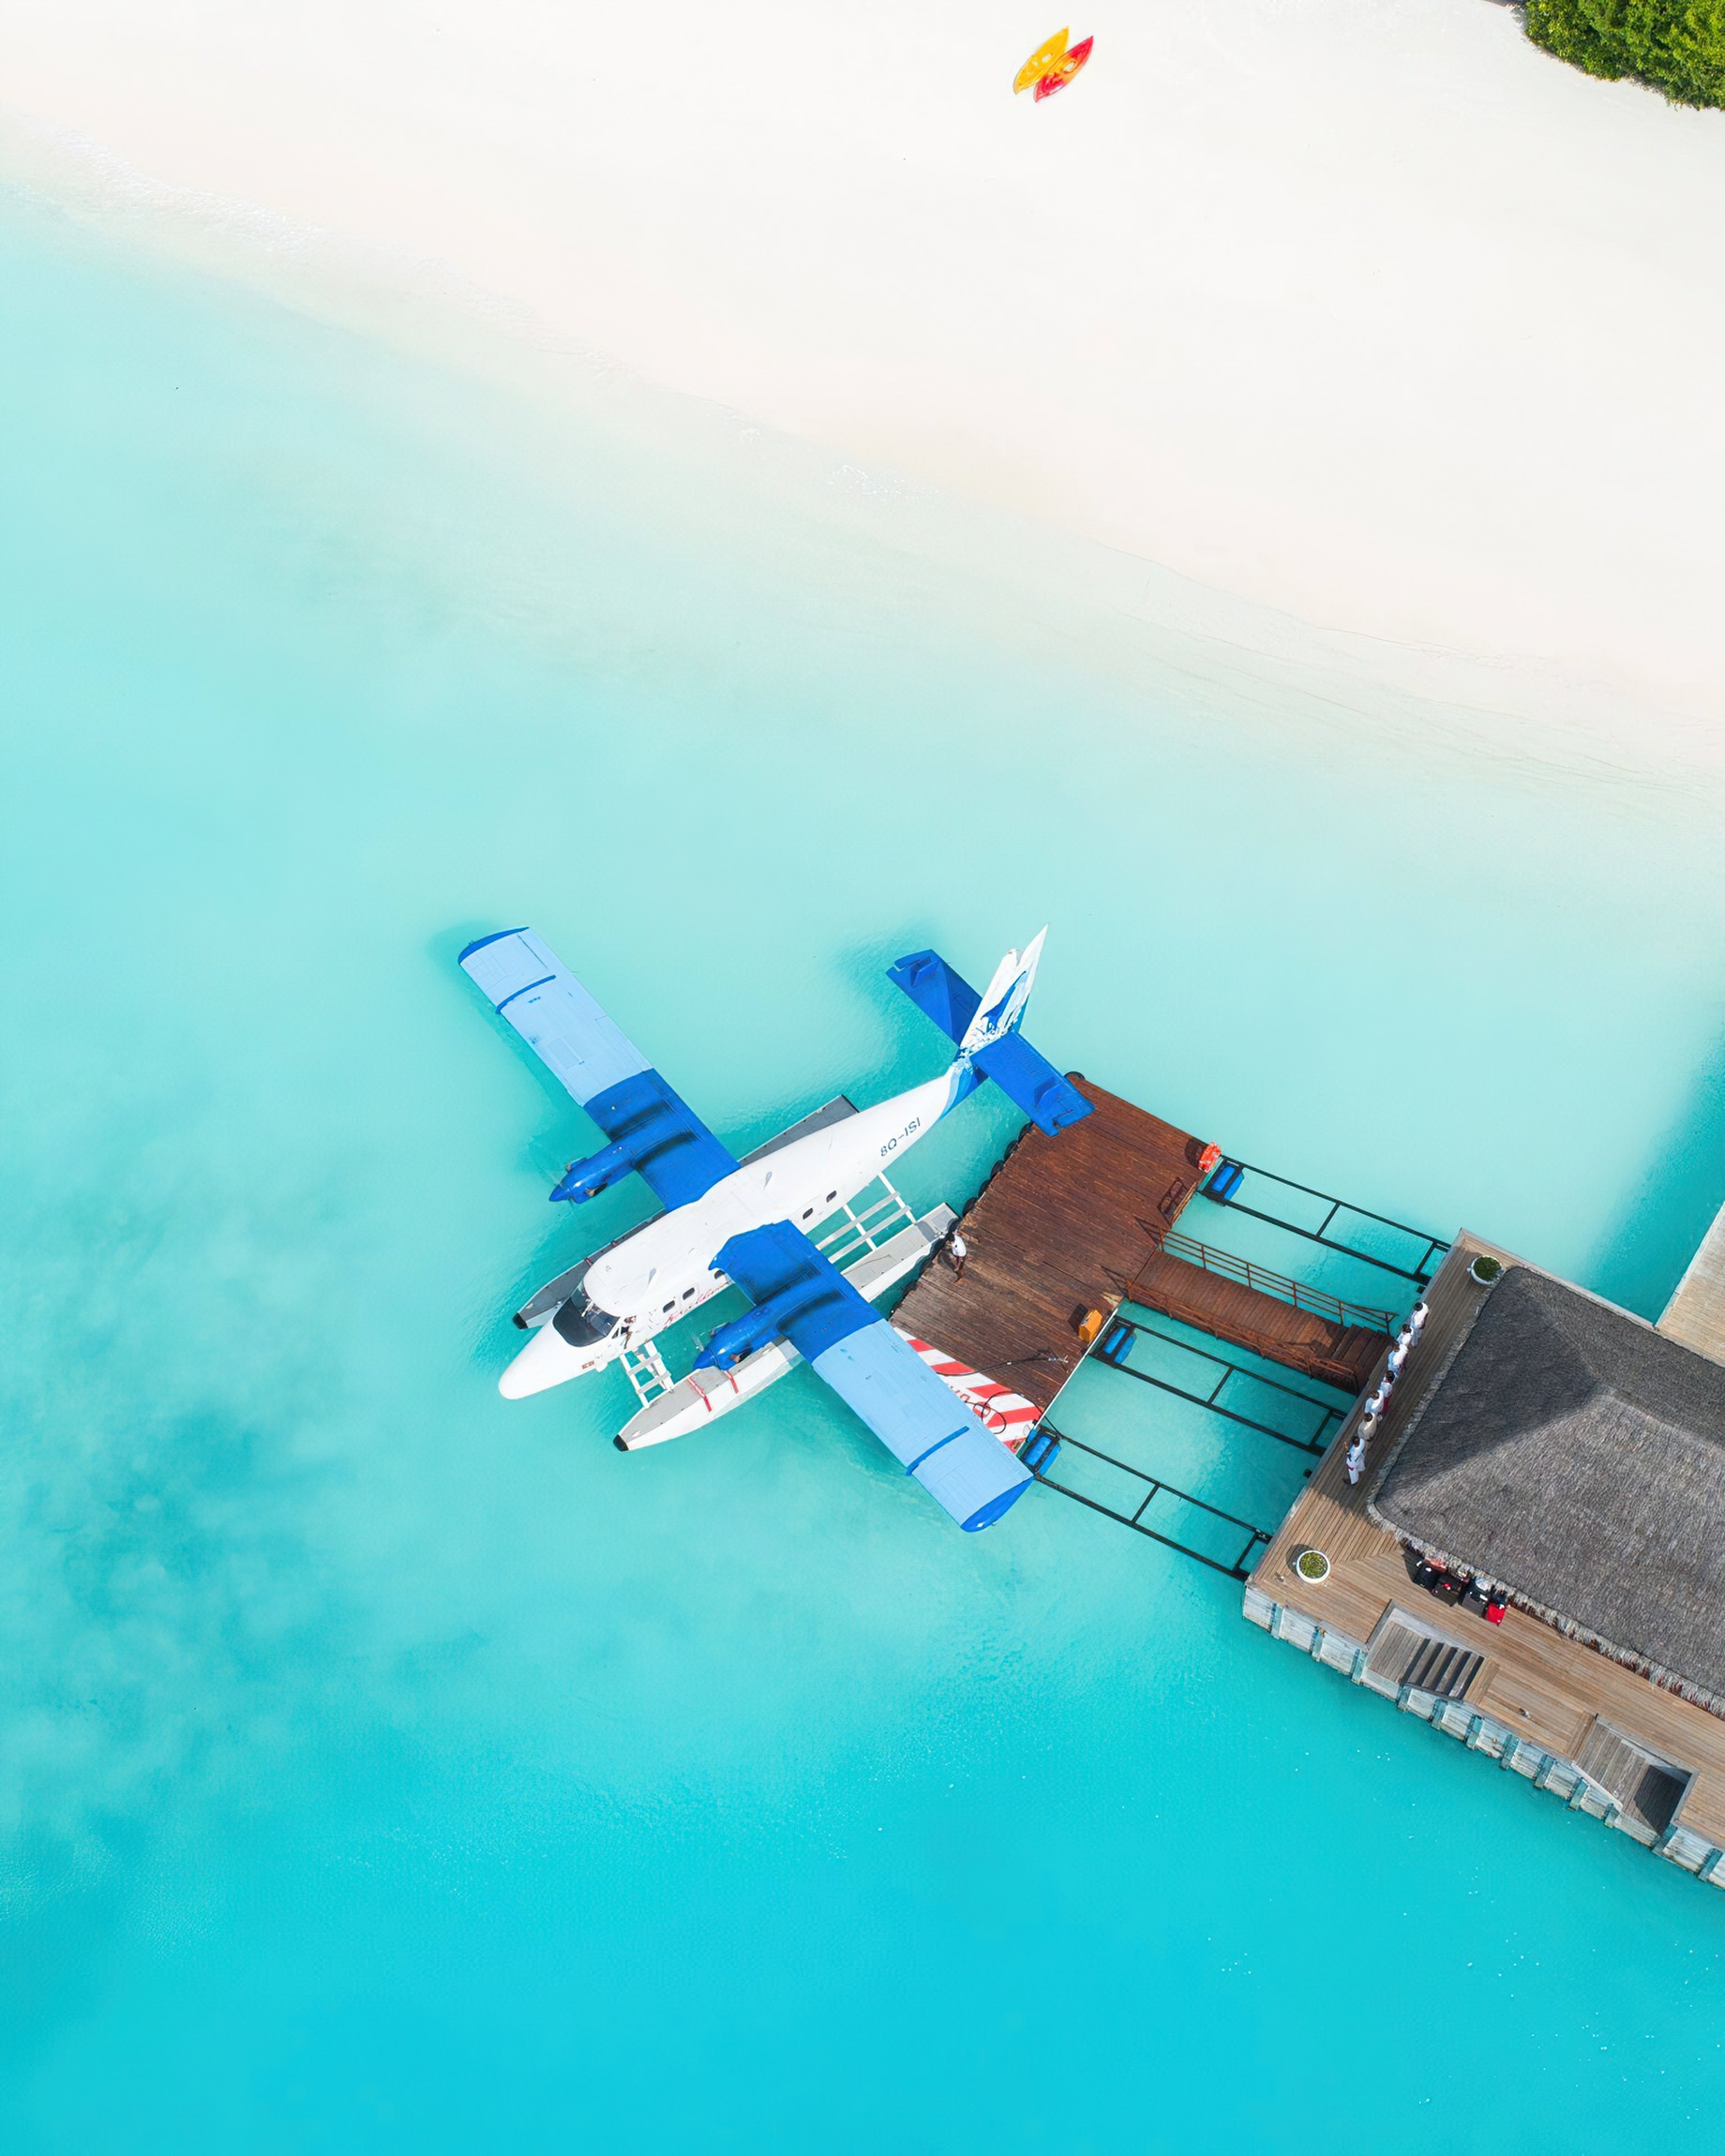 Niyama Private Islands Maldives Resort – Dhaalu Atoll, Maldives – Maldivian Seaplane Arrival Jetty Aerial View